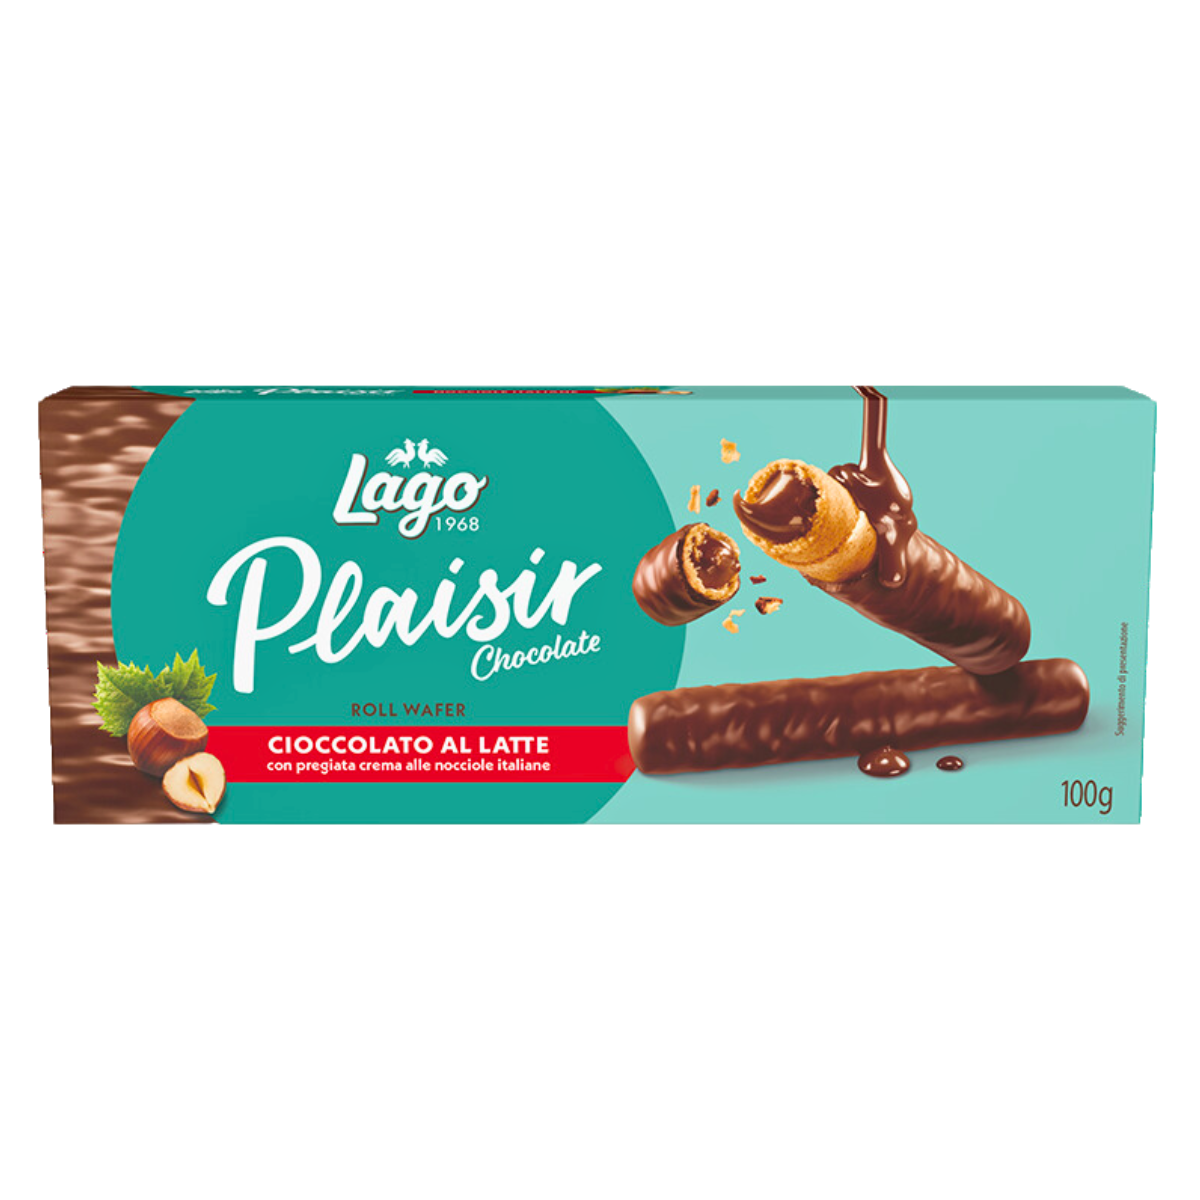 Lago Plaisir Chocolate Roll Wafer With Hazelnut 100g